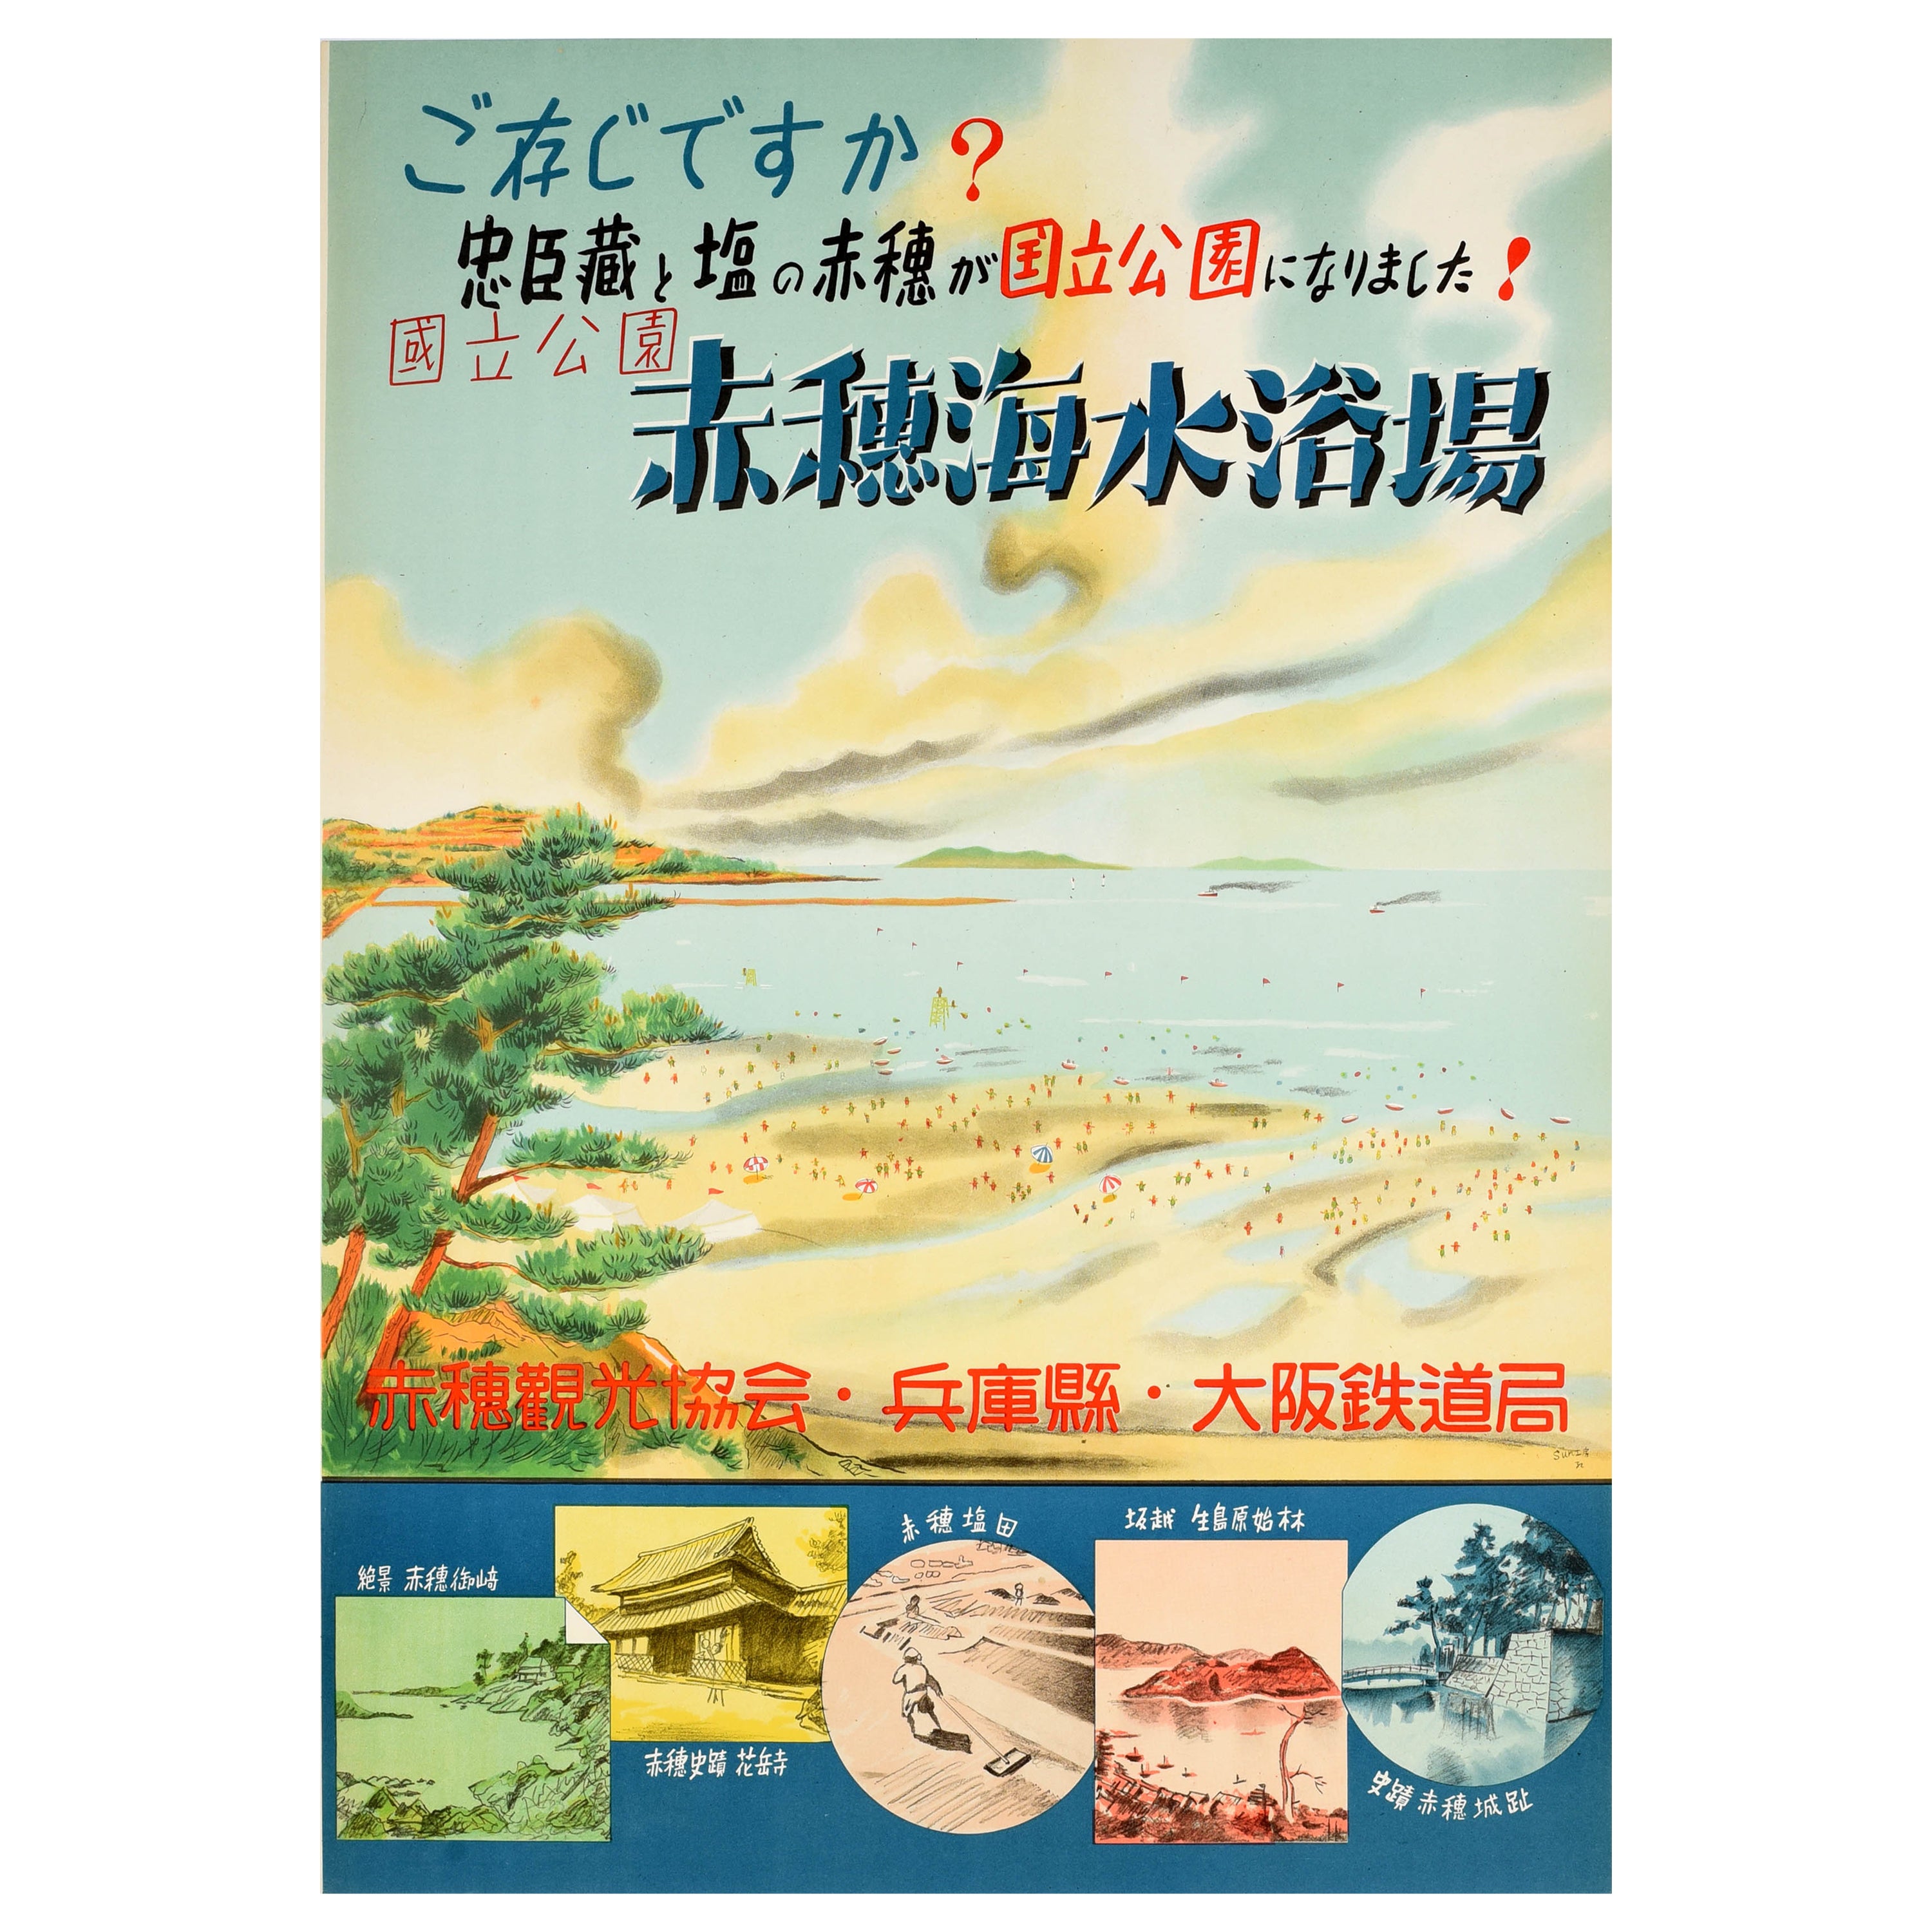 Original Vintage Travel Poster Fukuura Beach Japan Scenic Coast View Island Art